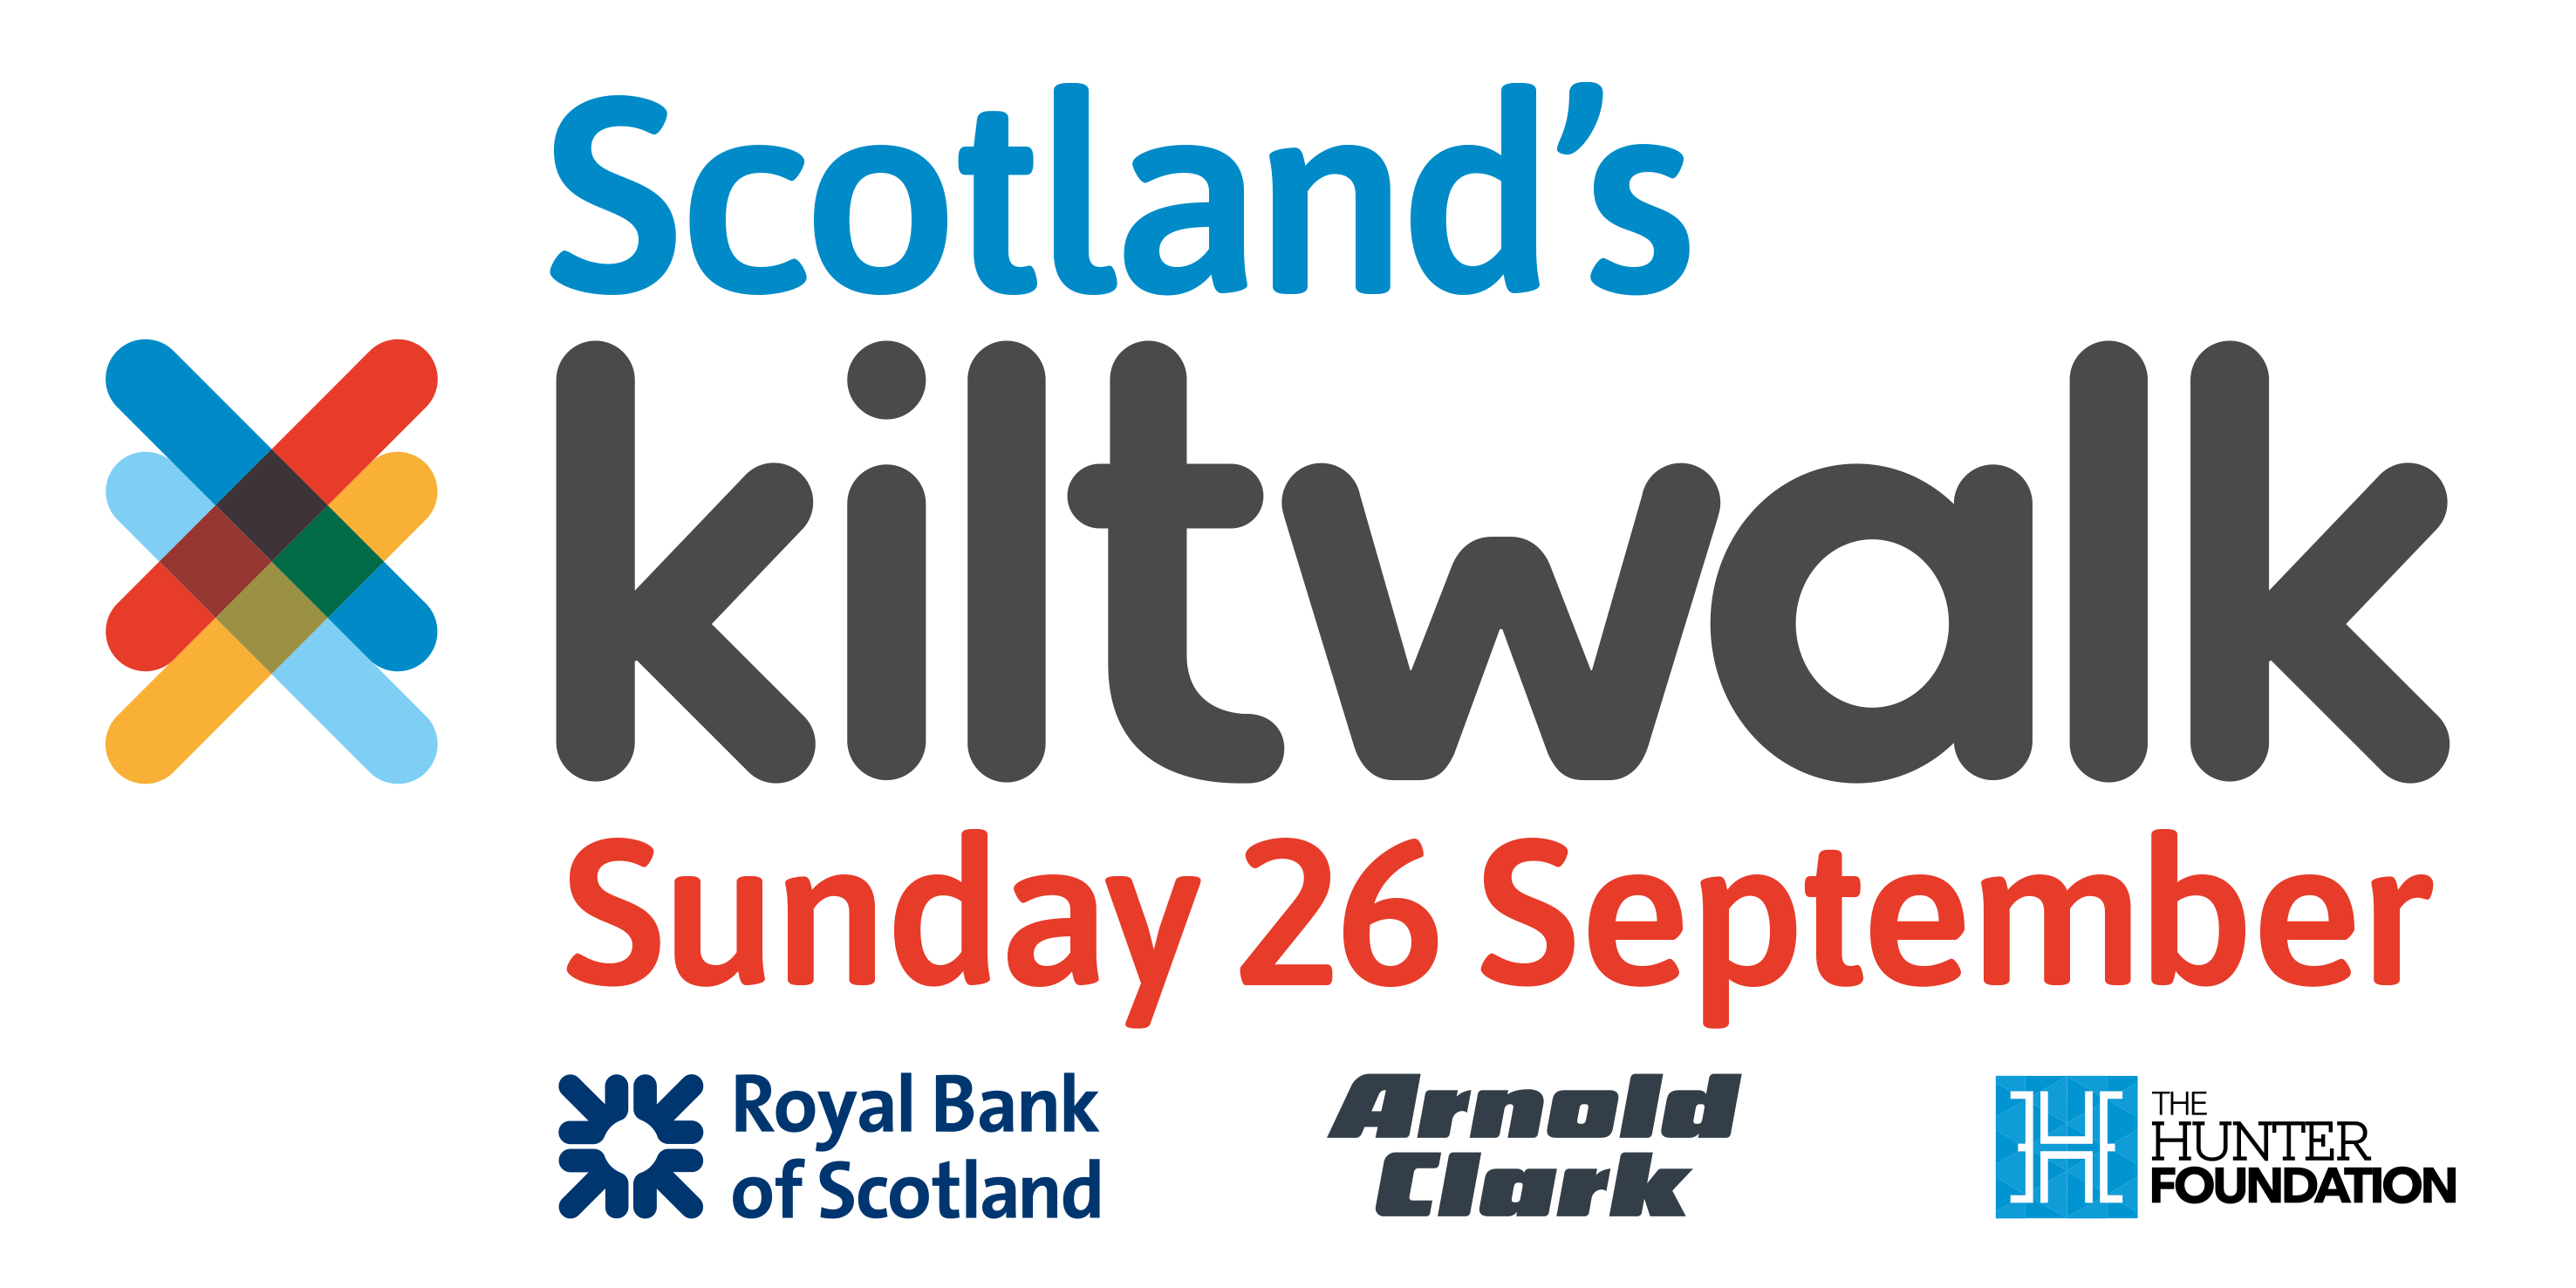 scotlands kiltwalk logo